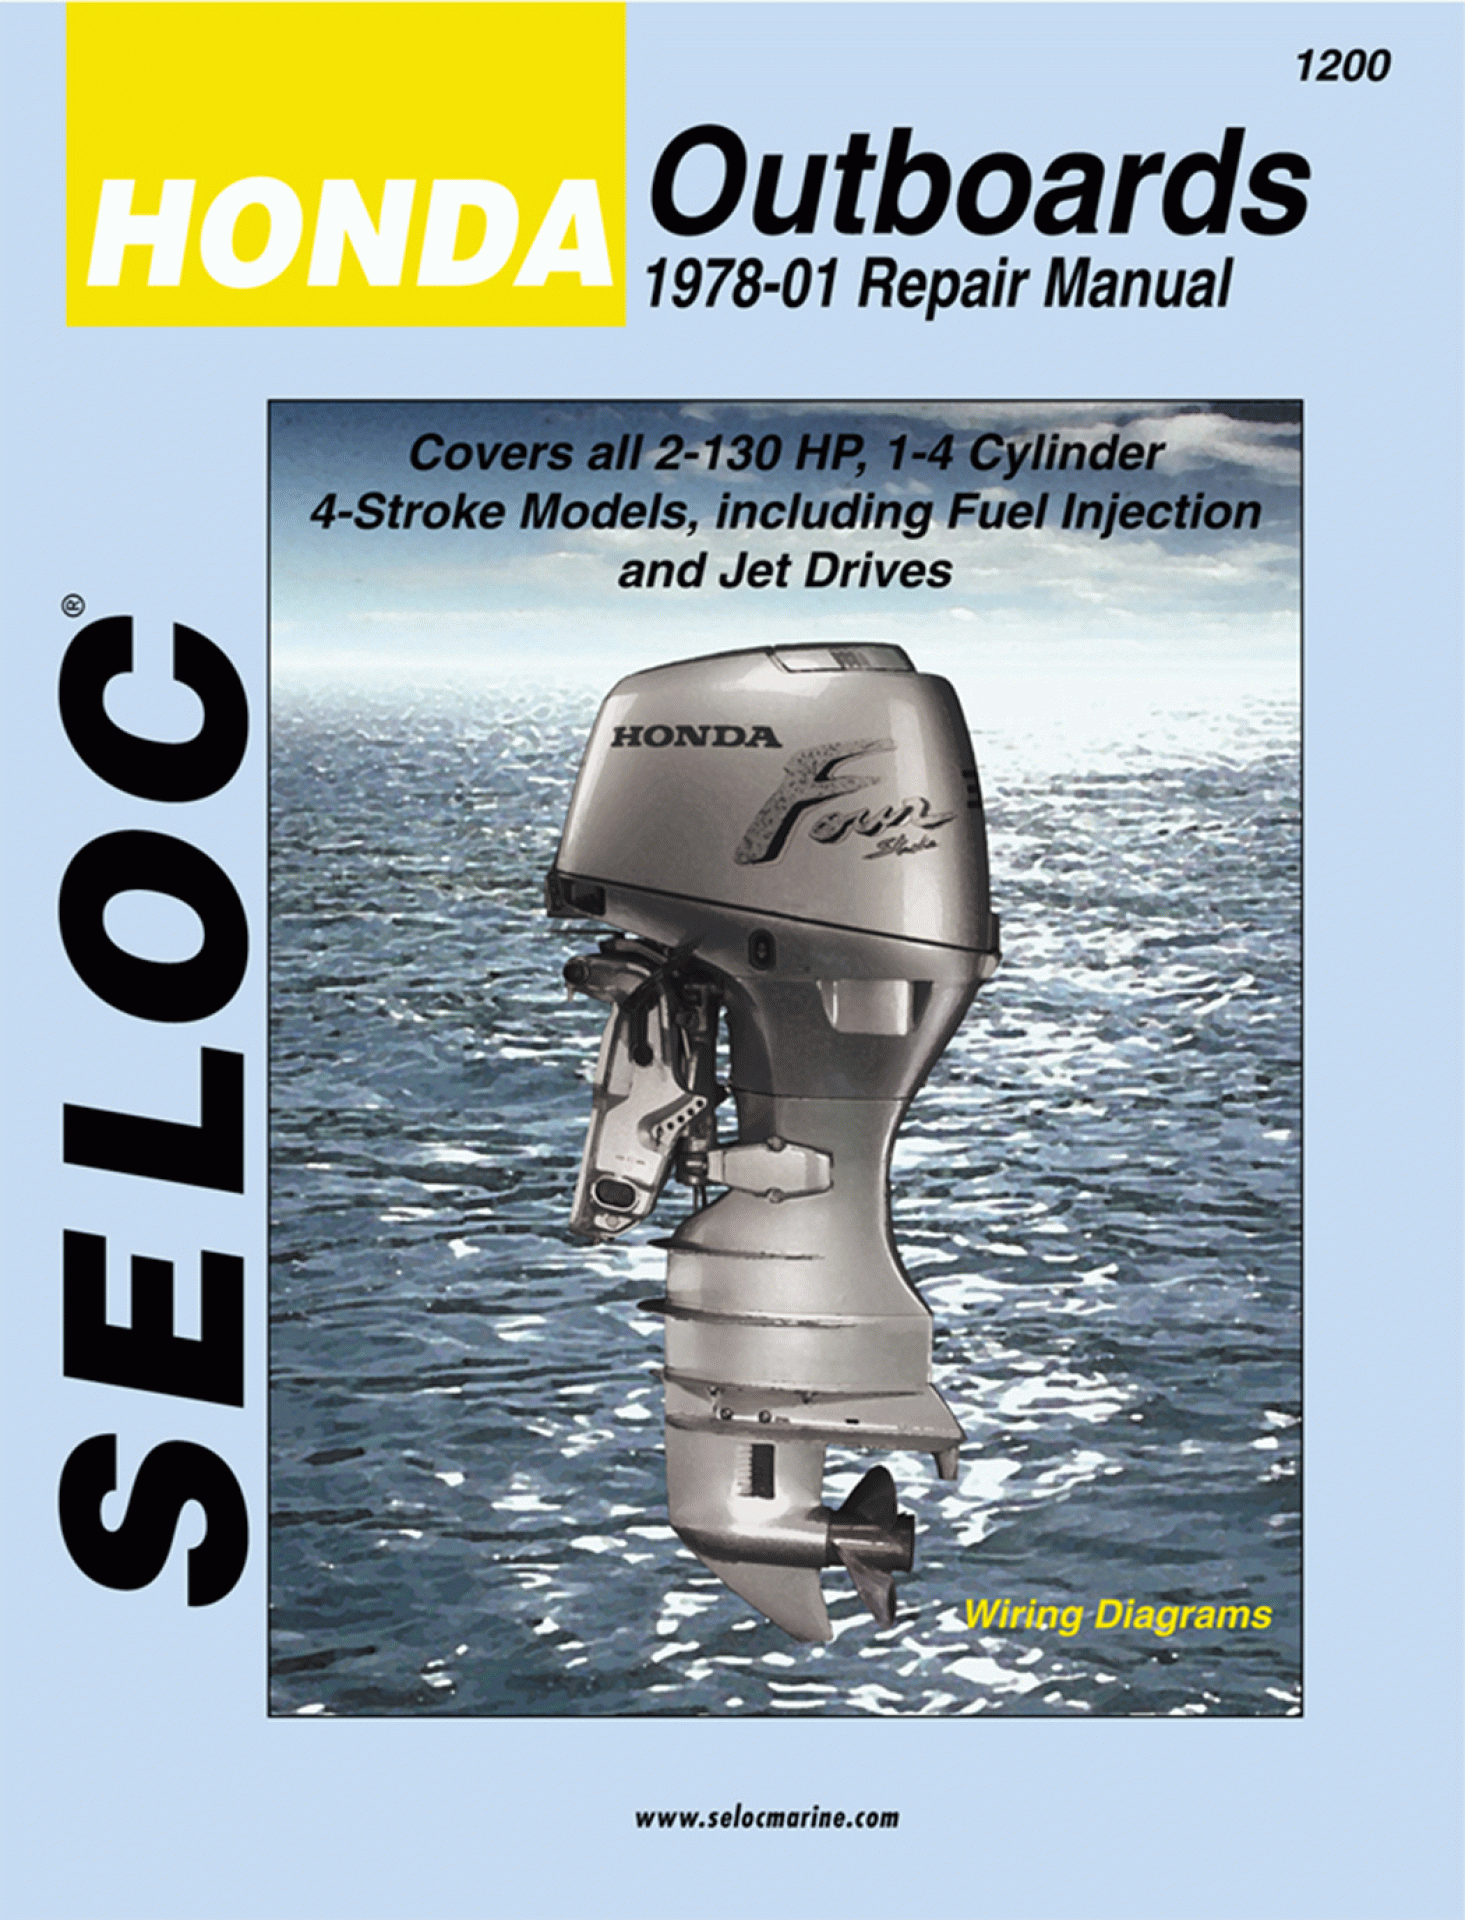 SELOC PUBLISHING | 18-01200 | REPAIR MANUAL Honda Outboards All Engines 1978-01